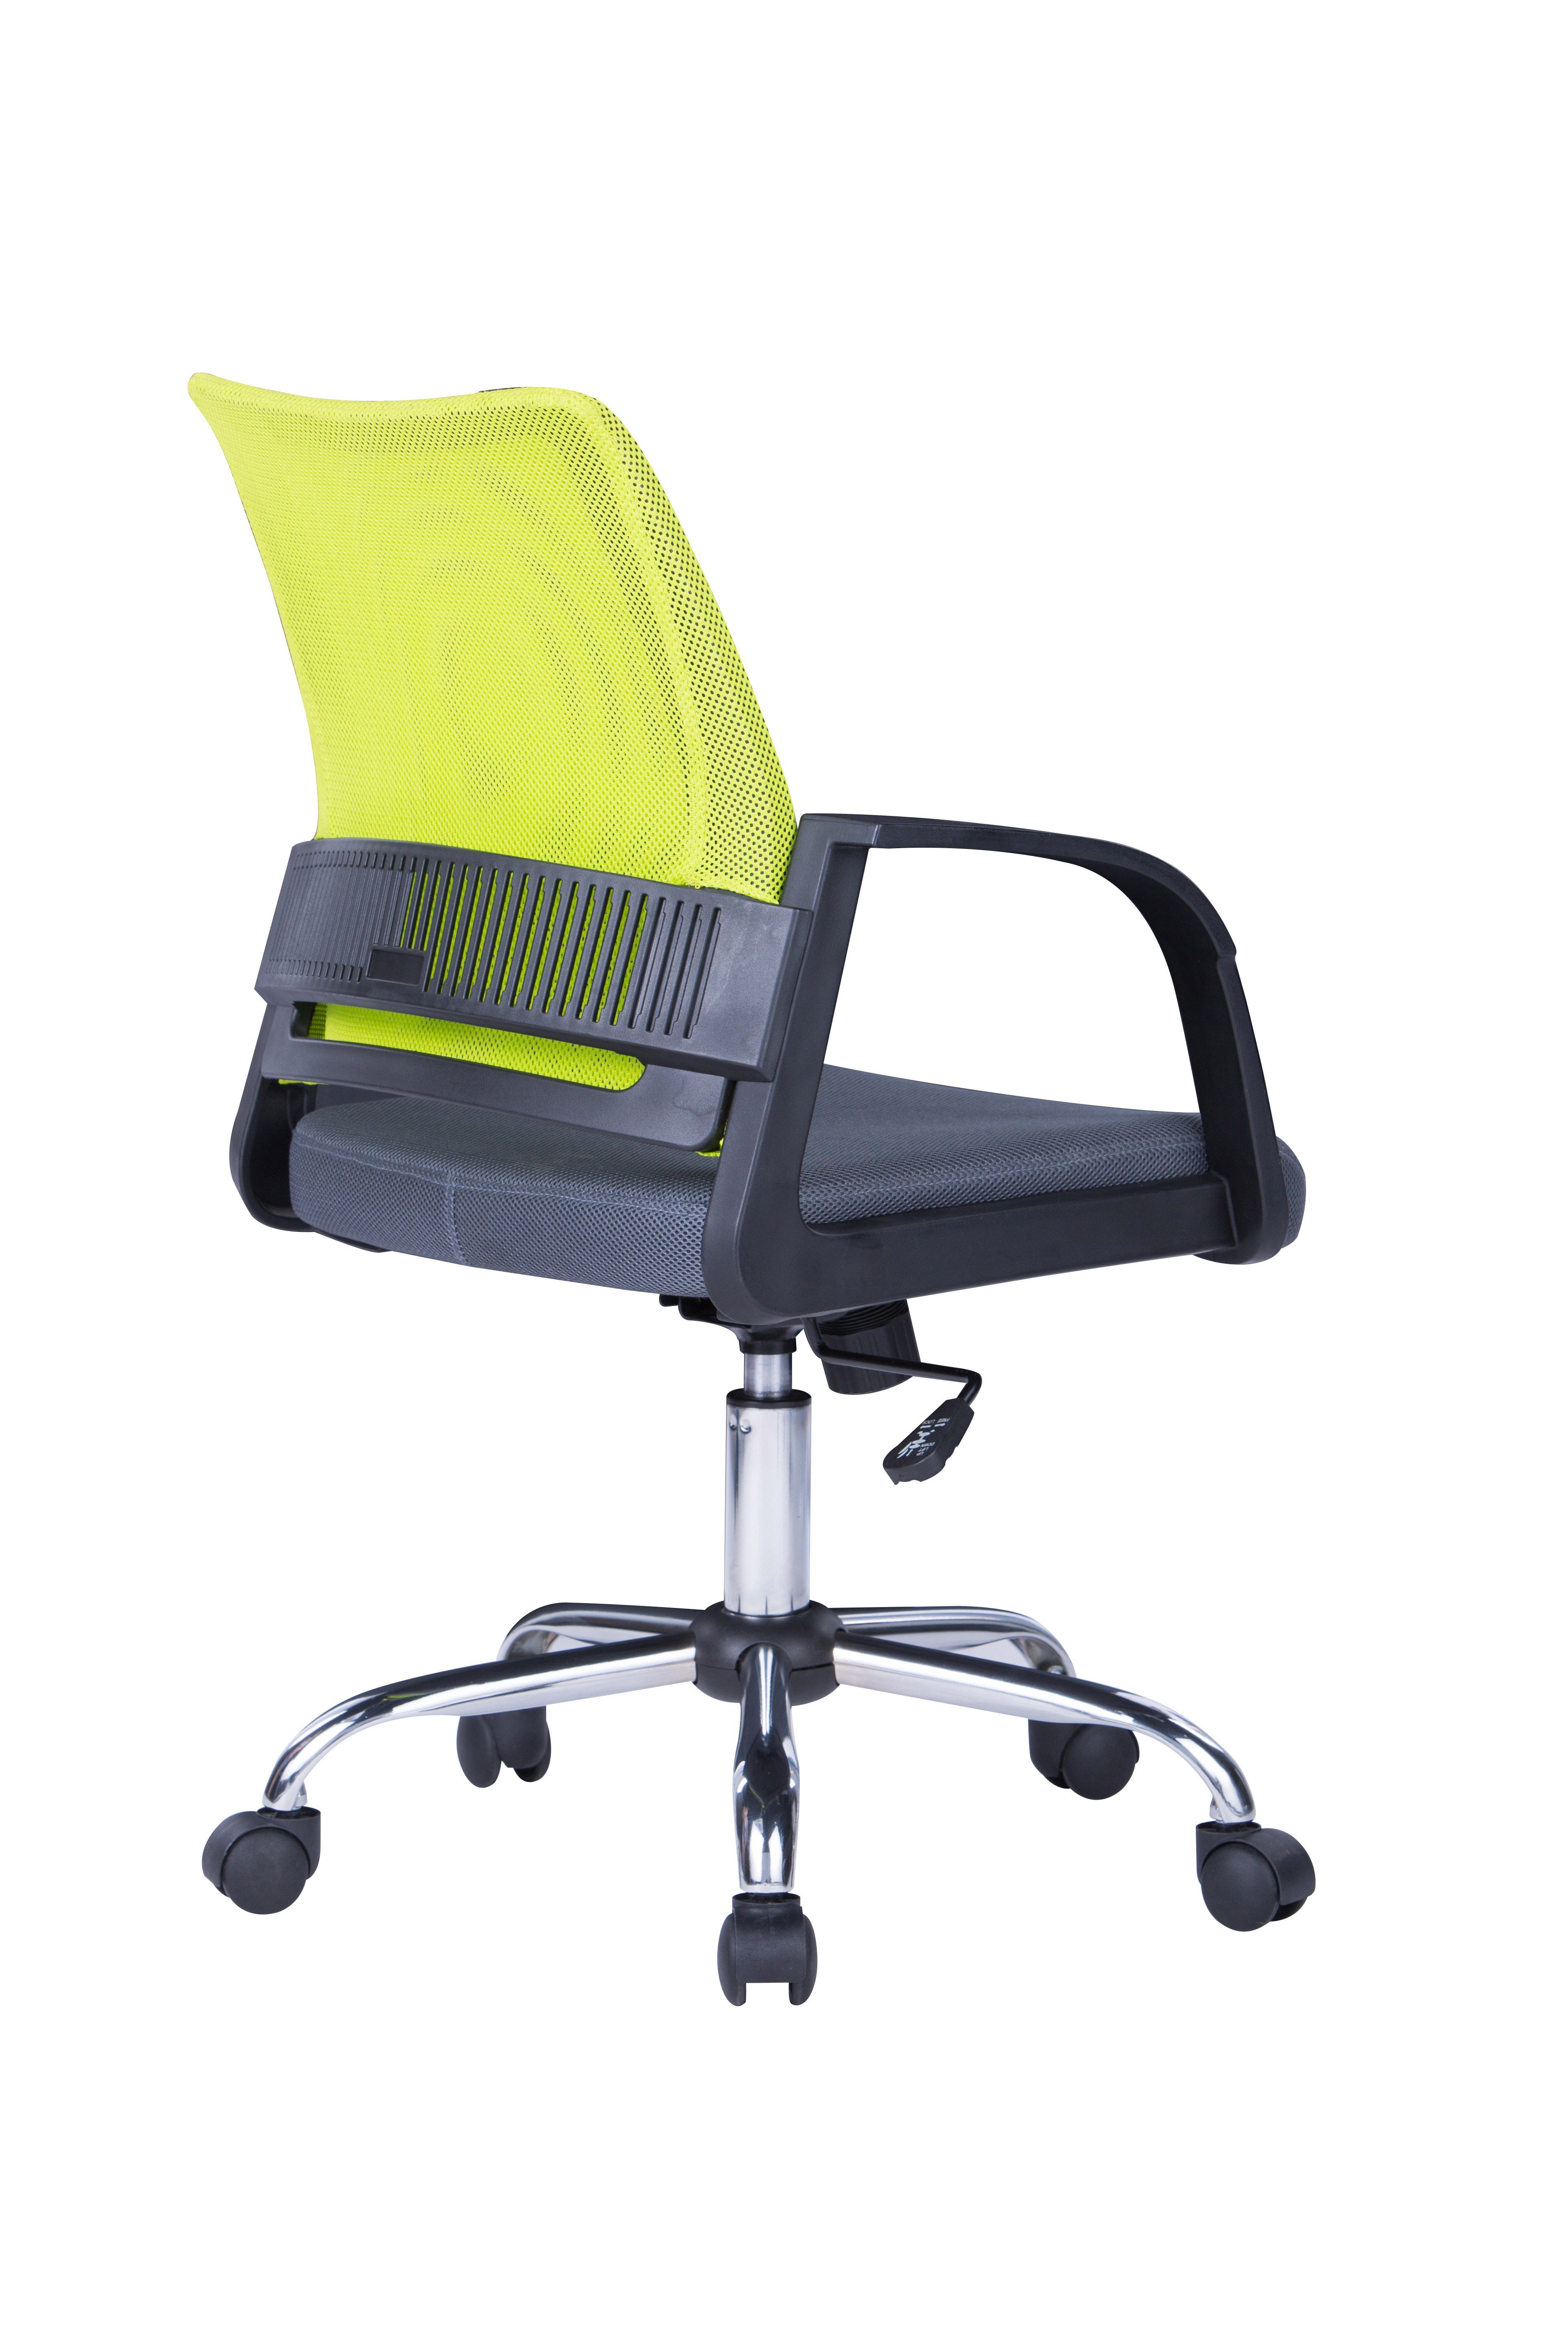 W-127 Modern Office Rotating Chair